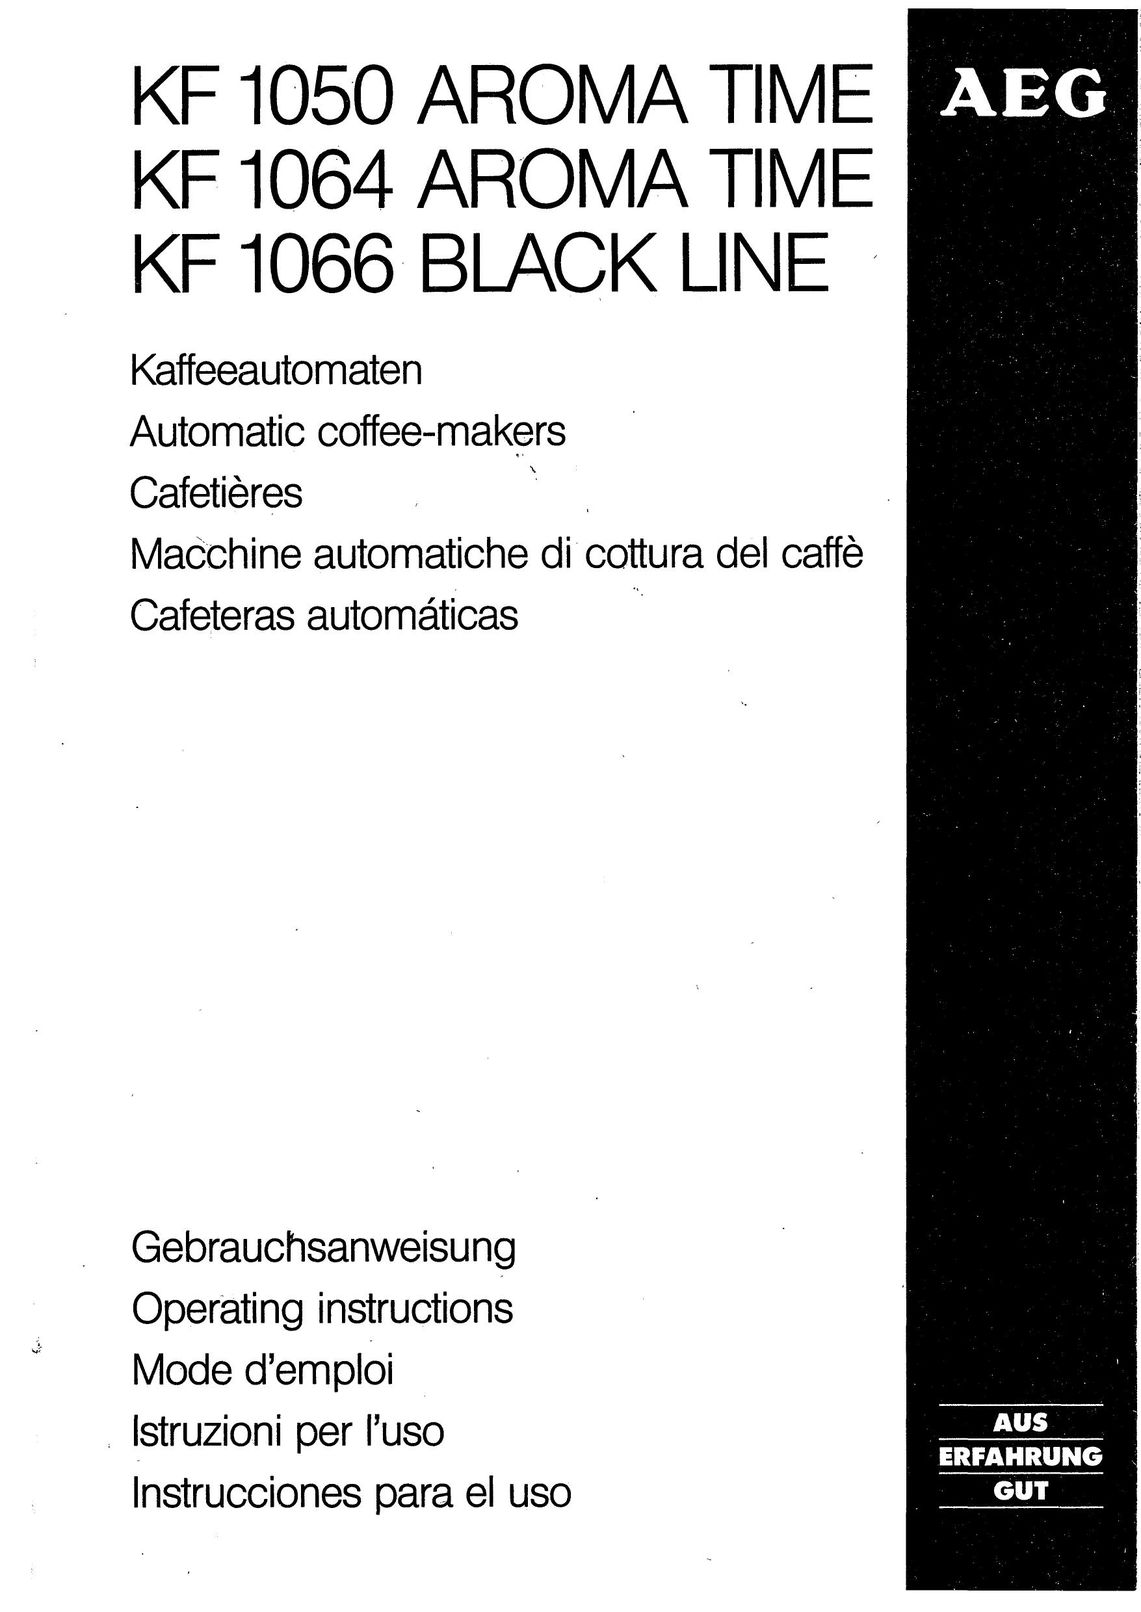 AEG KF 1066 Coffeemaker User Manual